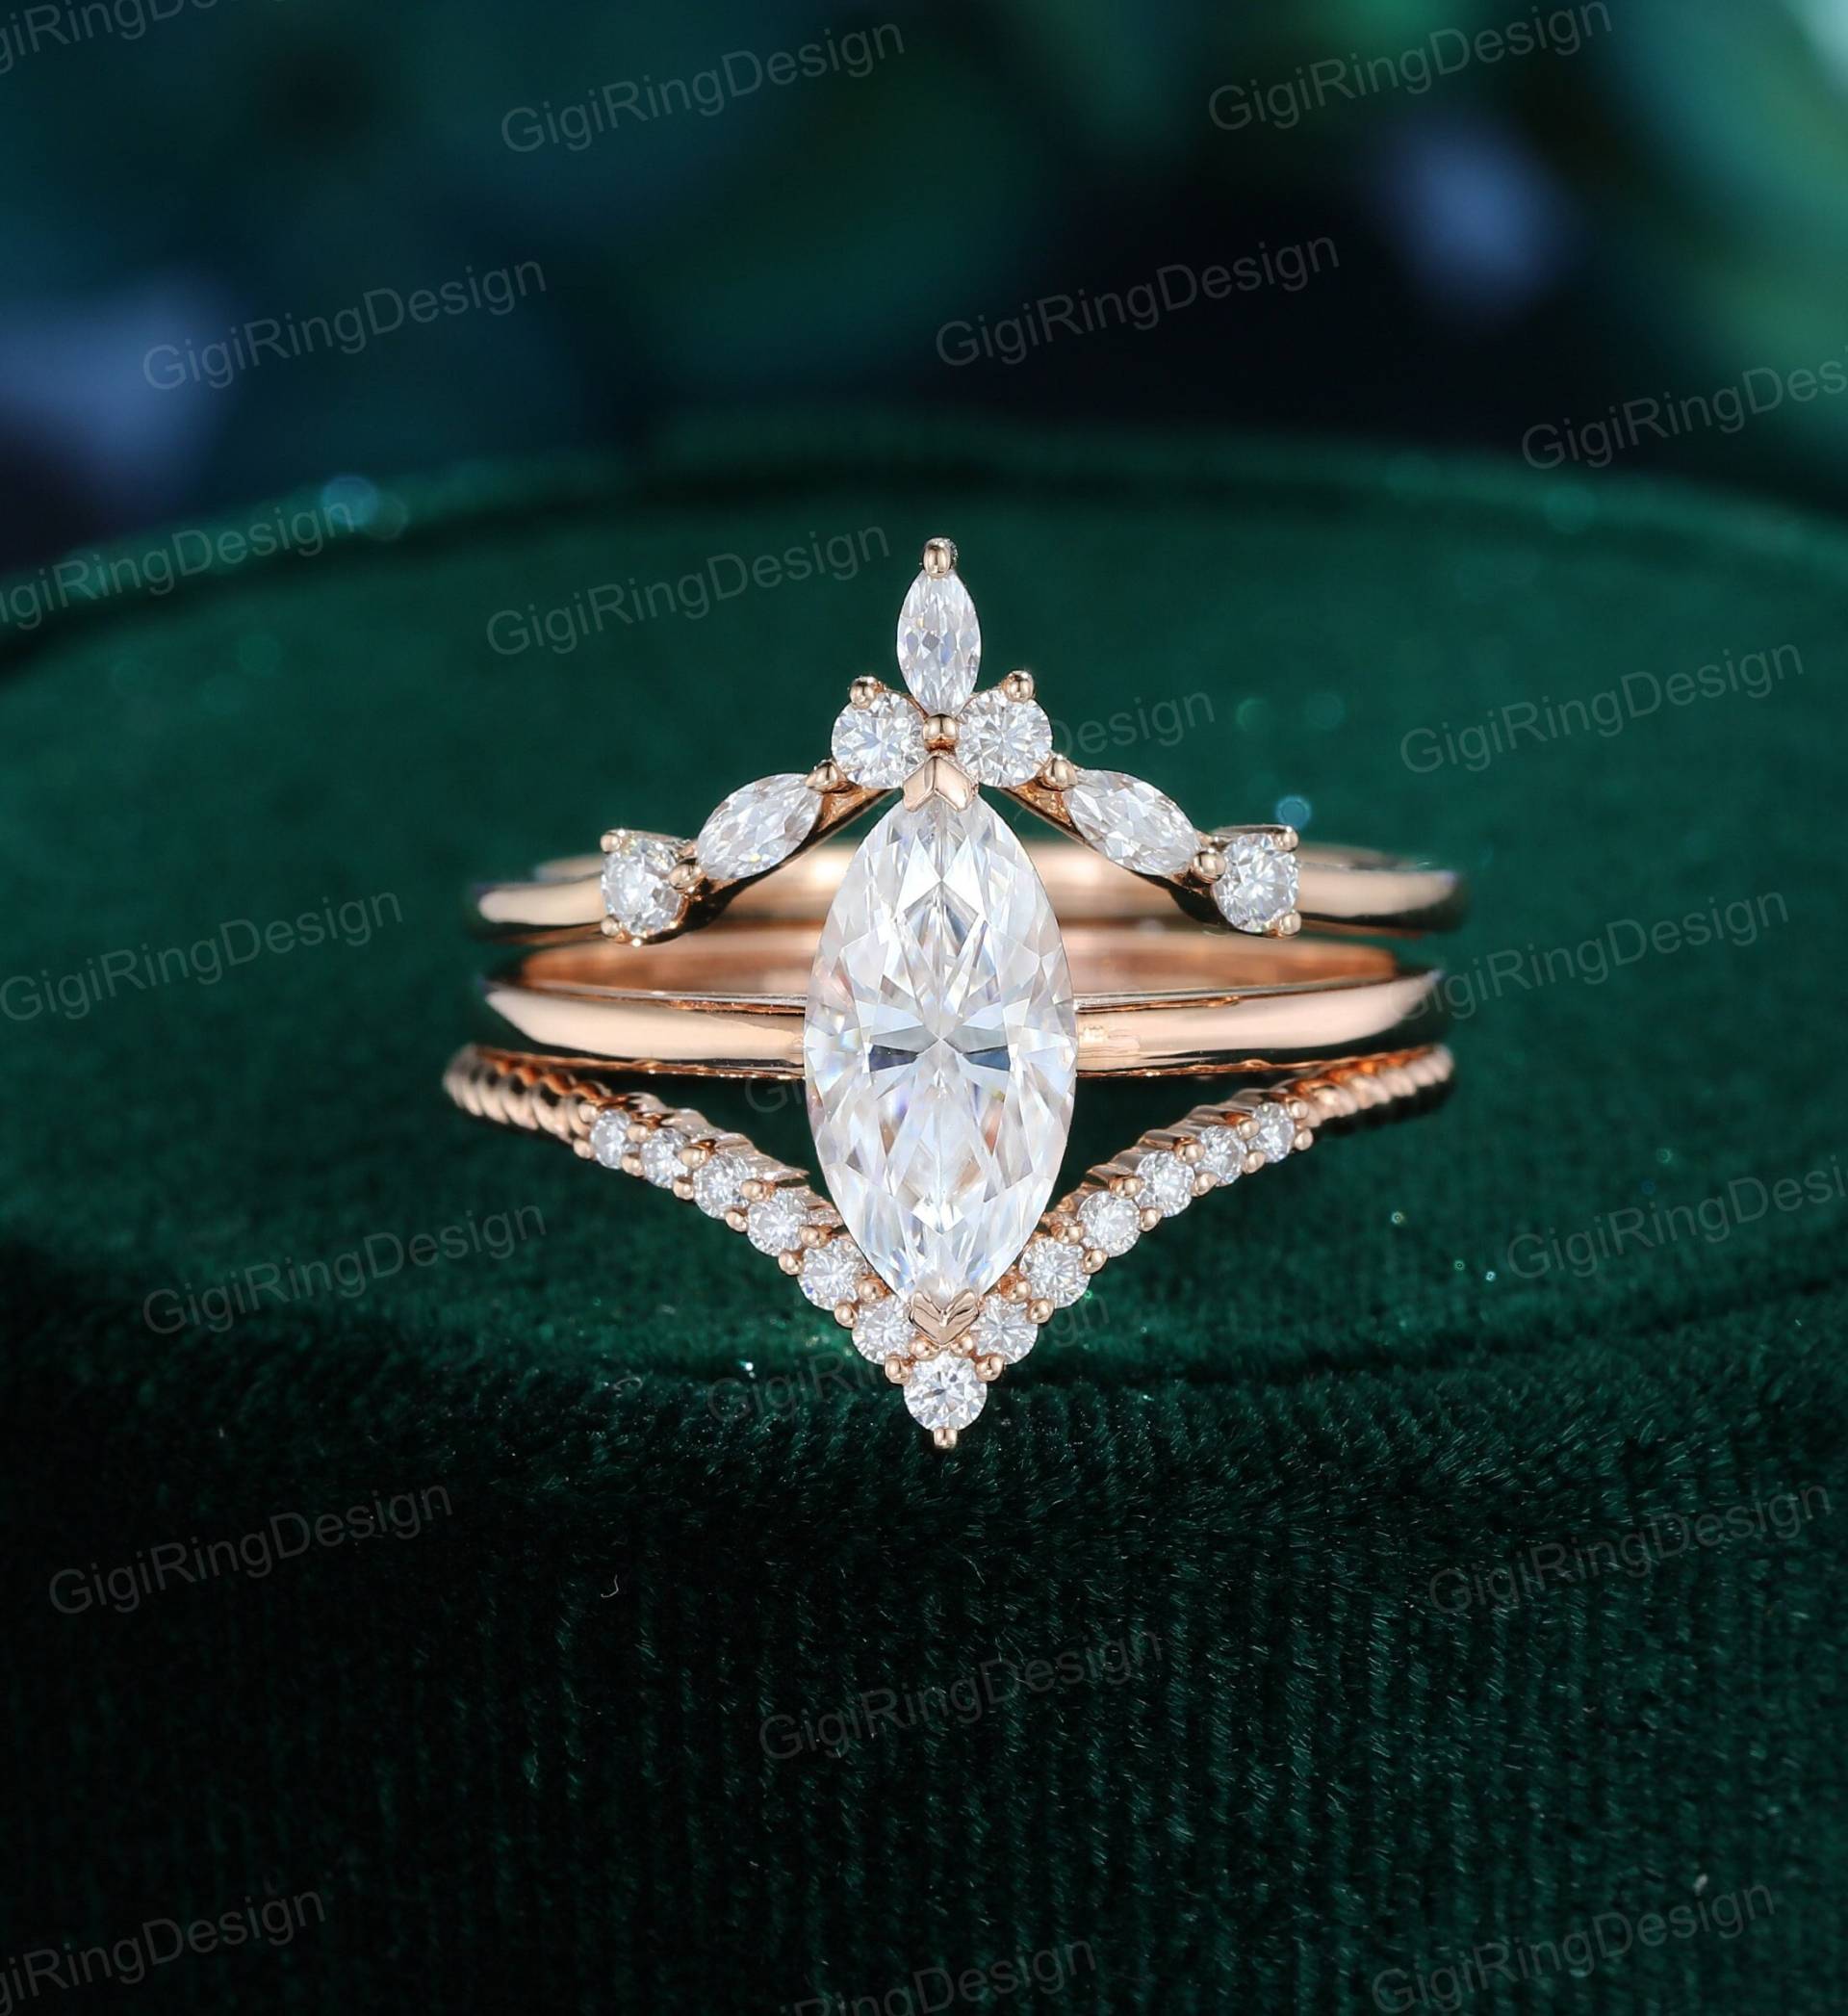 3stk Marquise Moissanit Verlobungsring Set Vintage Roségold Unikat Diamant Ring Swist Braut Set Promise Anniversary von GigiRingDesign